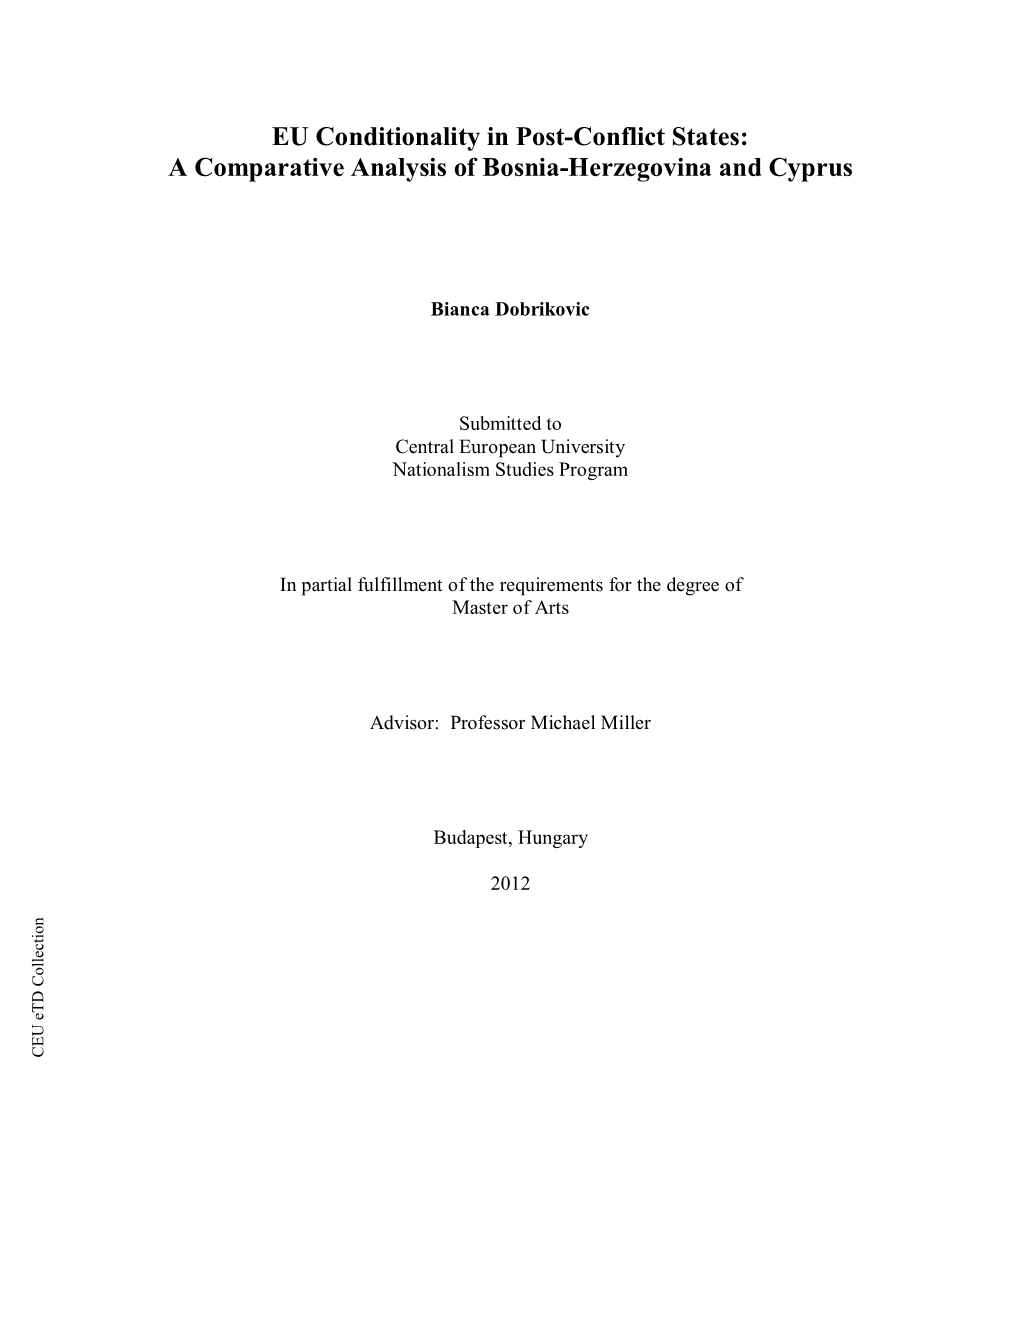 A Comparative Analysis of Bosnia-Herzegovina and Cyprus